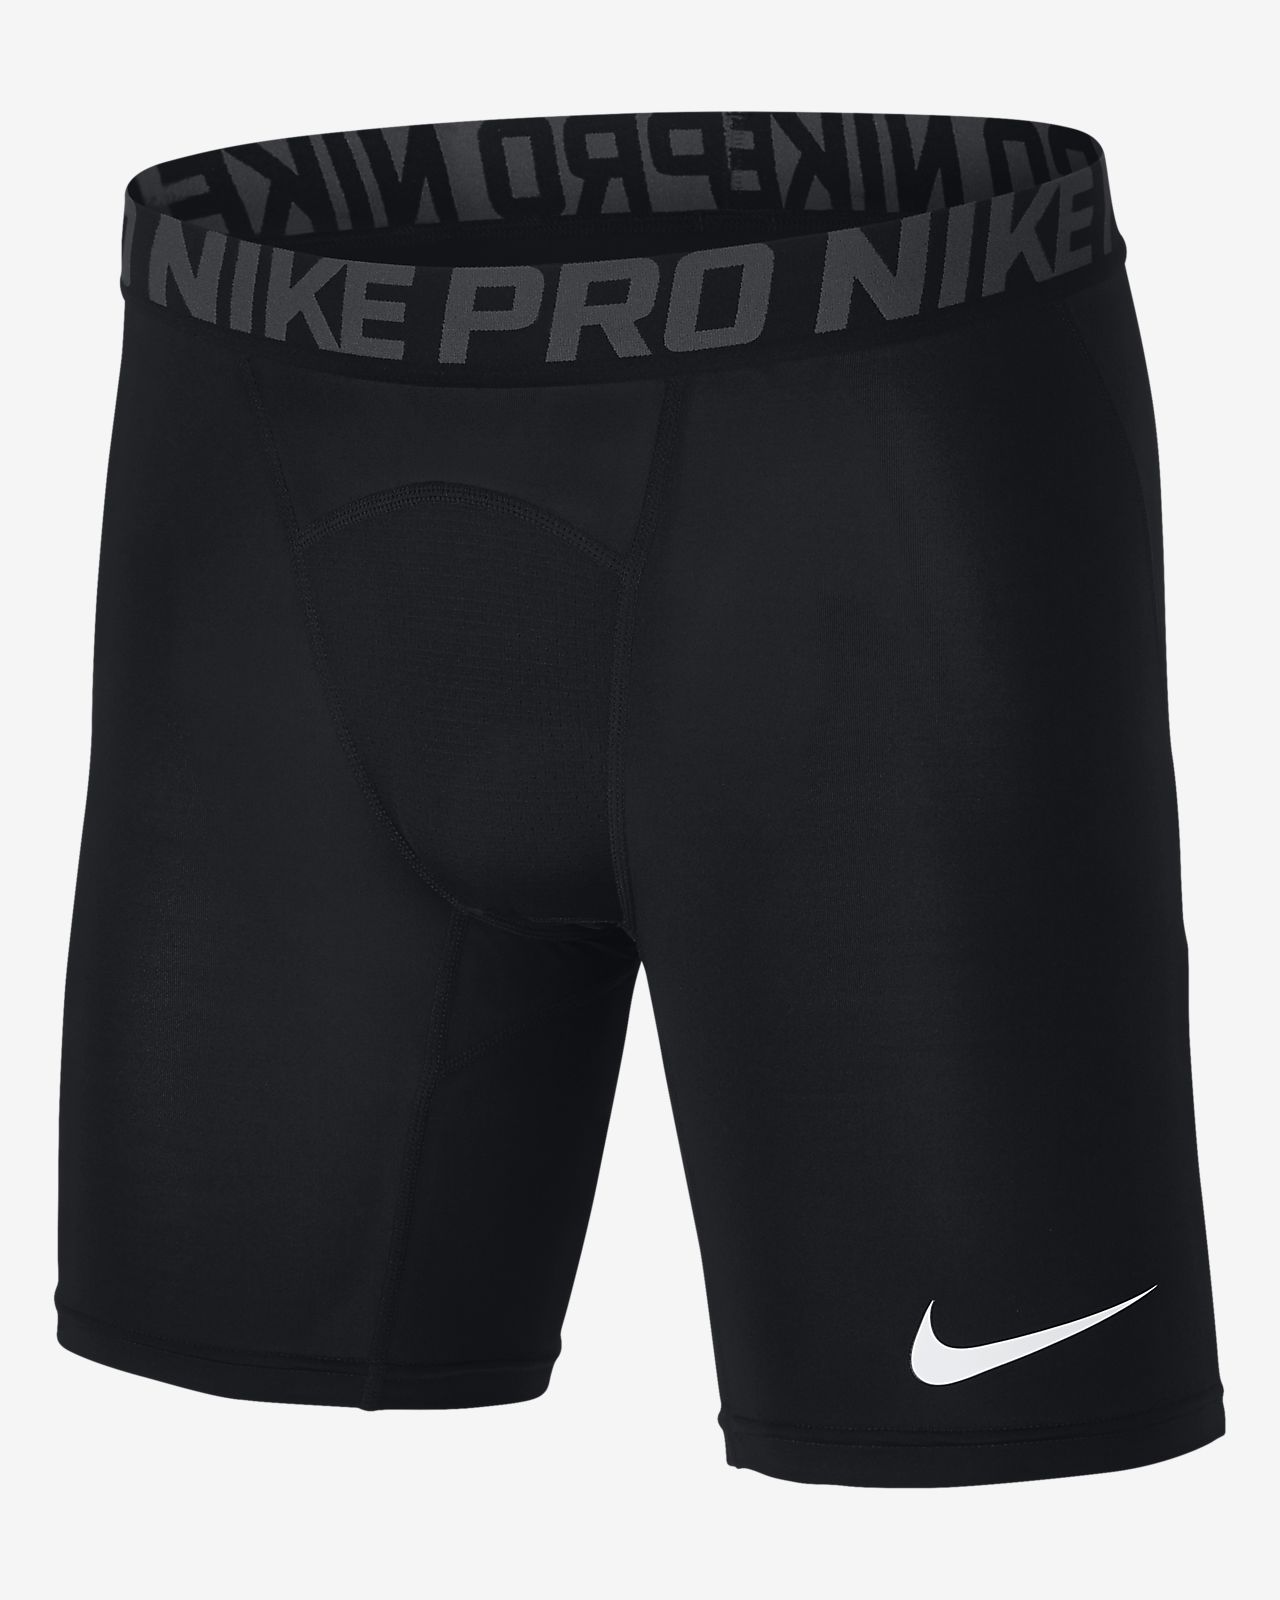 nike pro under shorts discount 169cd 2c6f4